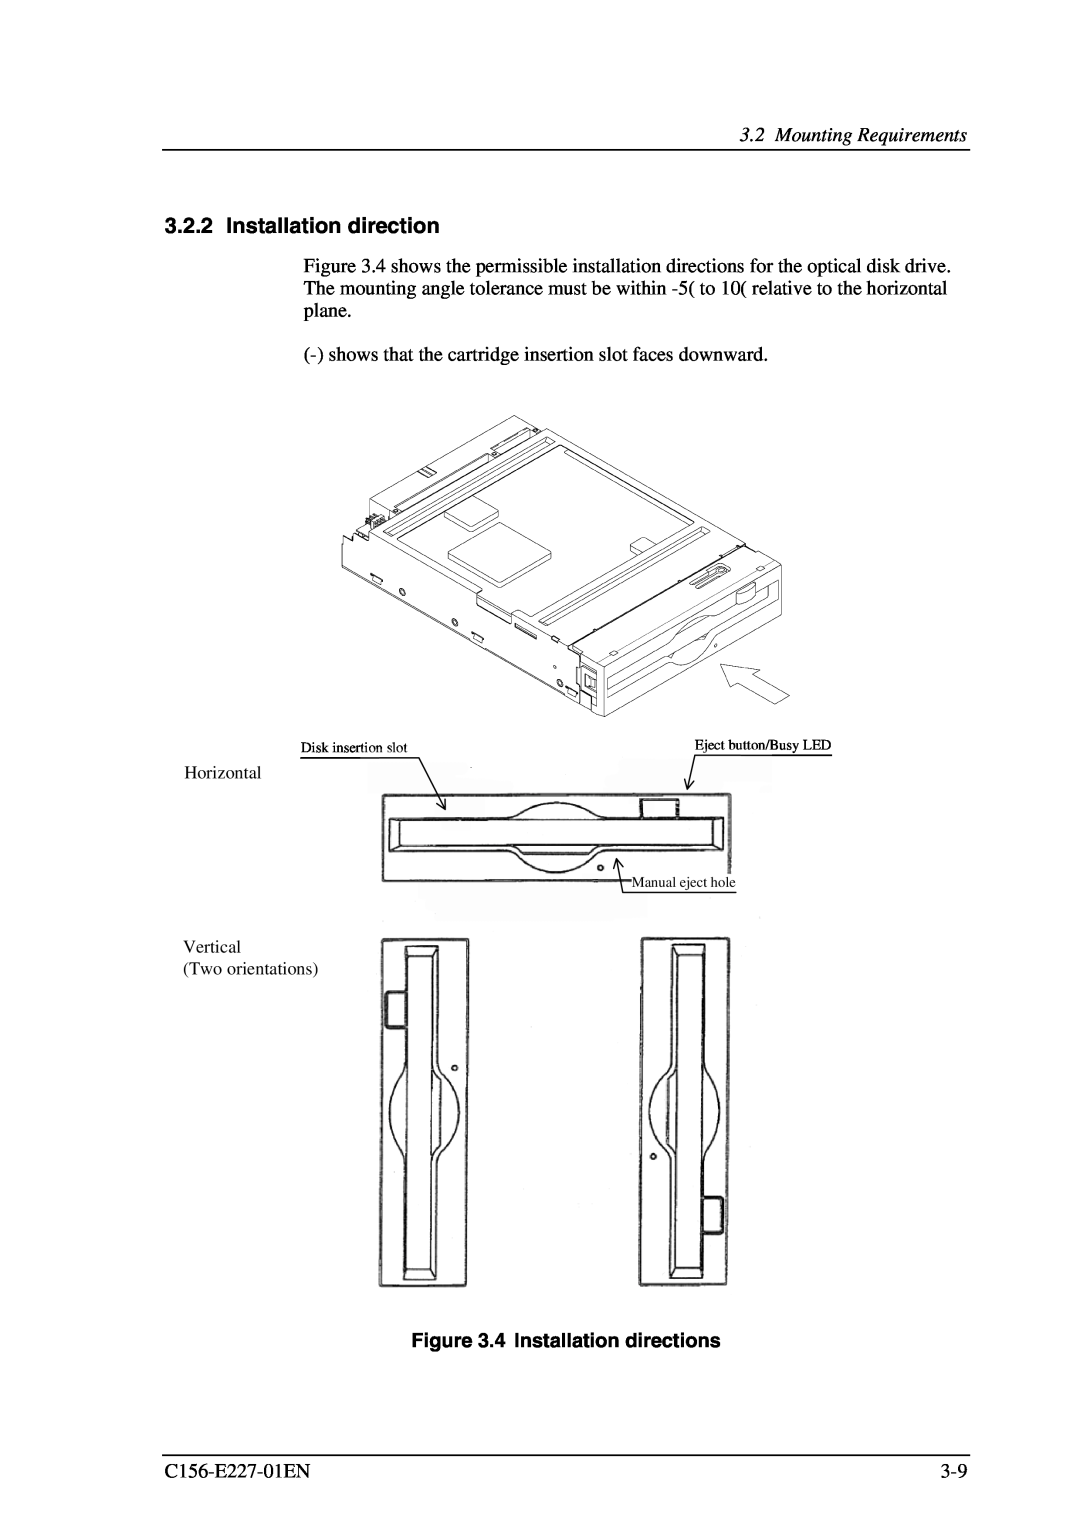 Fujitsu MCM3130AP, MCM3064AP manual 4 Installation directions, Mounting Requirements 